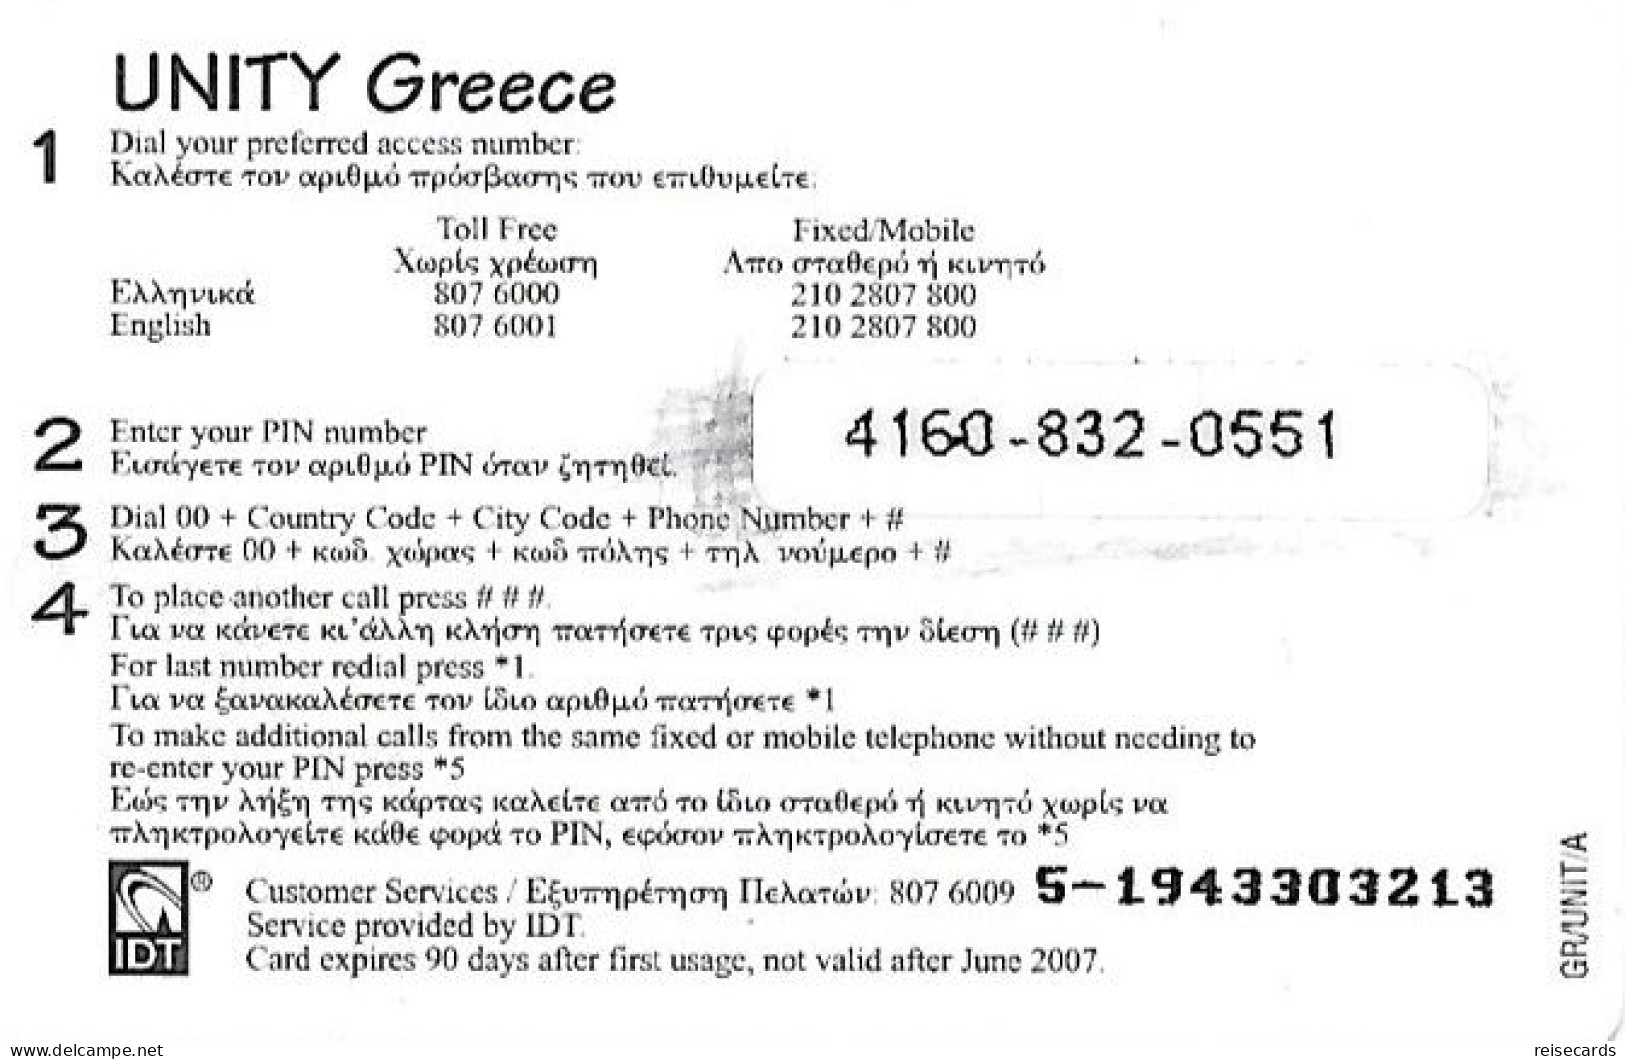 Greece: Prepaid IDT Unity 06.07 - Griechenland